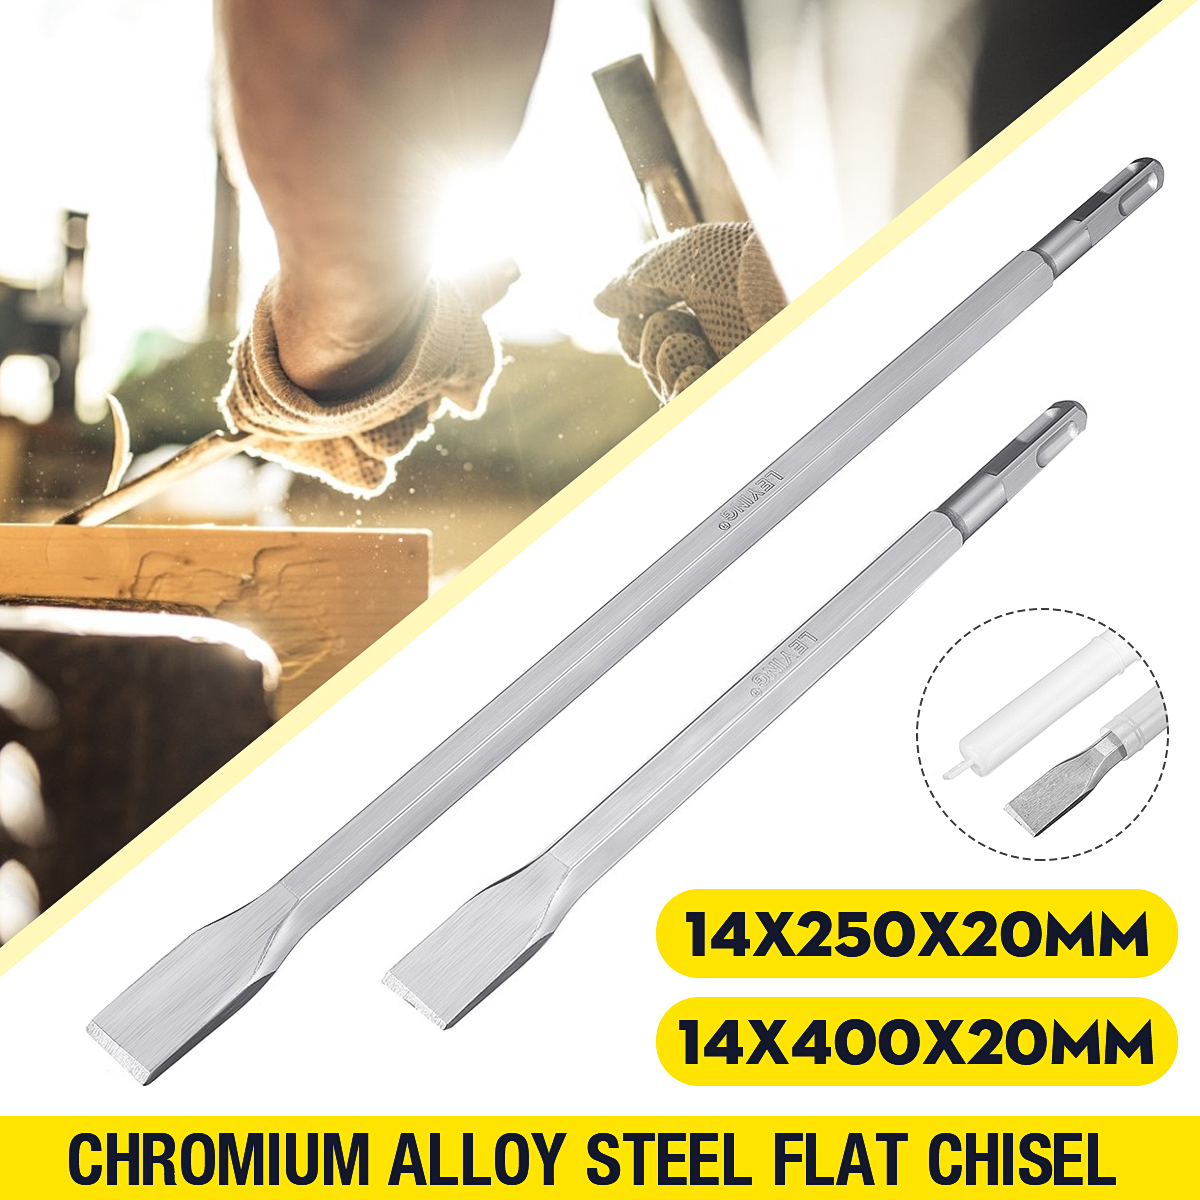 14mm-Chromium-Alloy-Steel-Square-Handle-Concrete-Brick-Wall-Slotting-Drill-Bit-Flat-Chisel-1648258-1